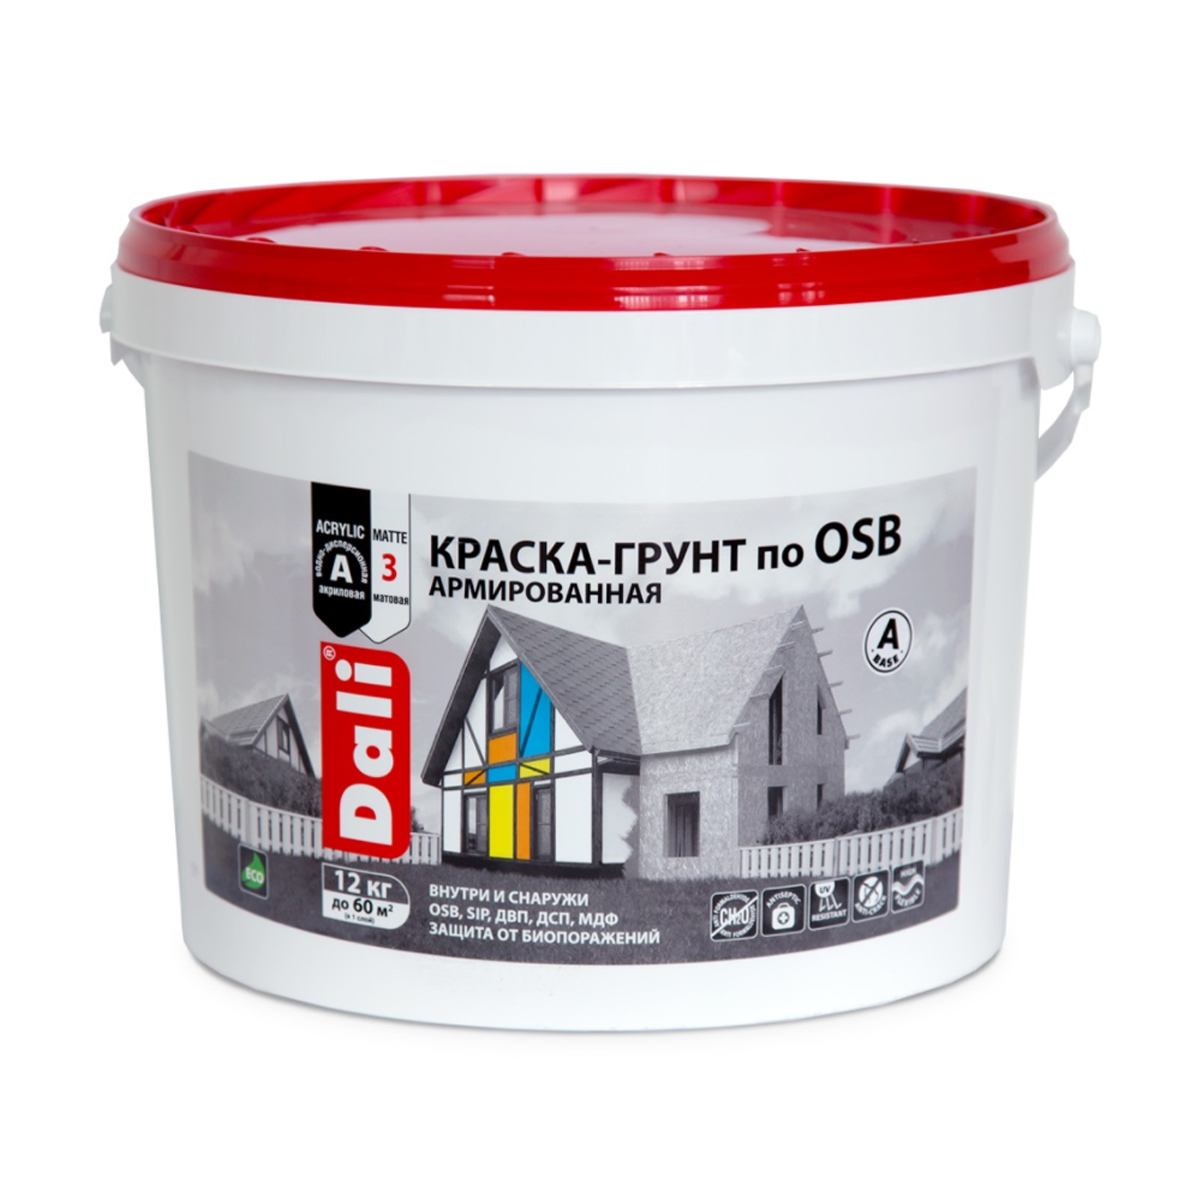 Краска-грунт по OSB Dali, армированная, матовая, база A, белая, 12 кг армированная краска грунт для osb плит farbitex